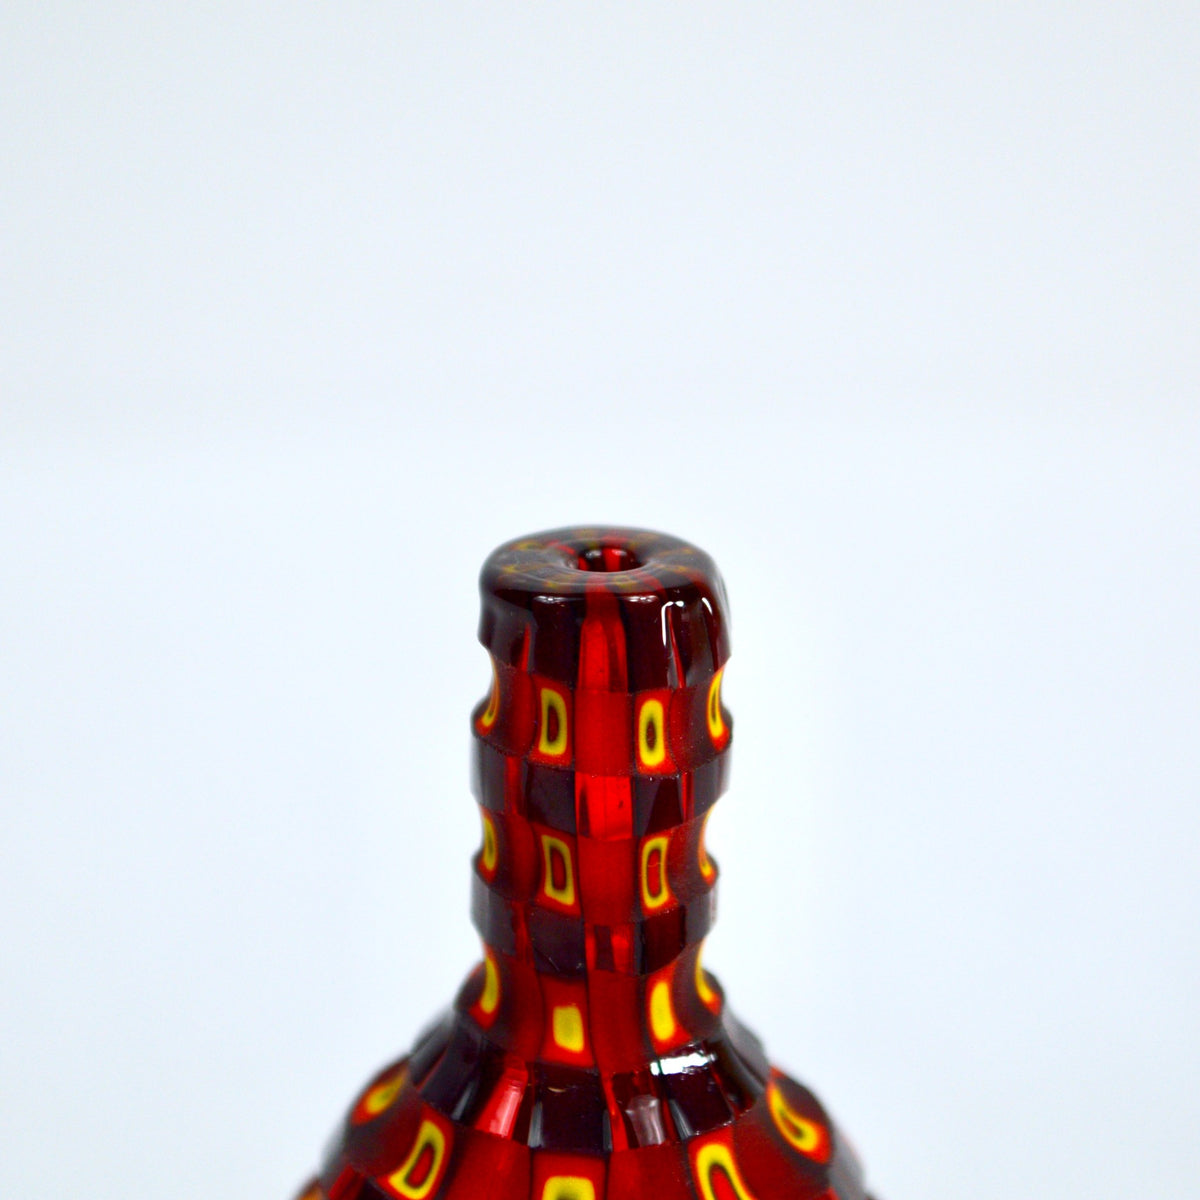 Murano Glass Millefiori Petite Decorative Bottles - Set of 3, Red - My Italian Decor